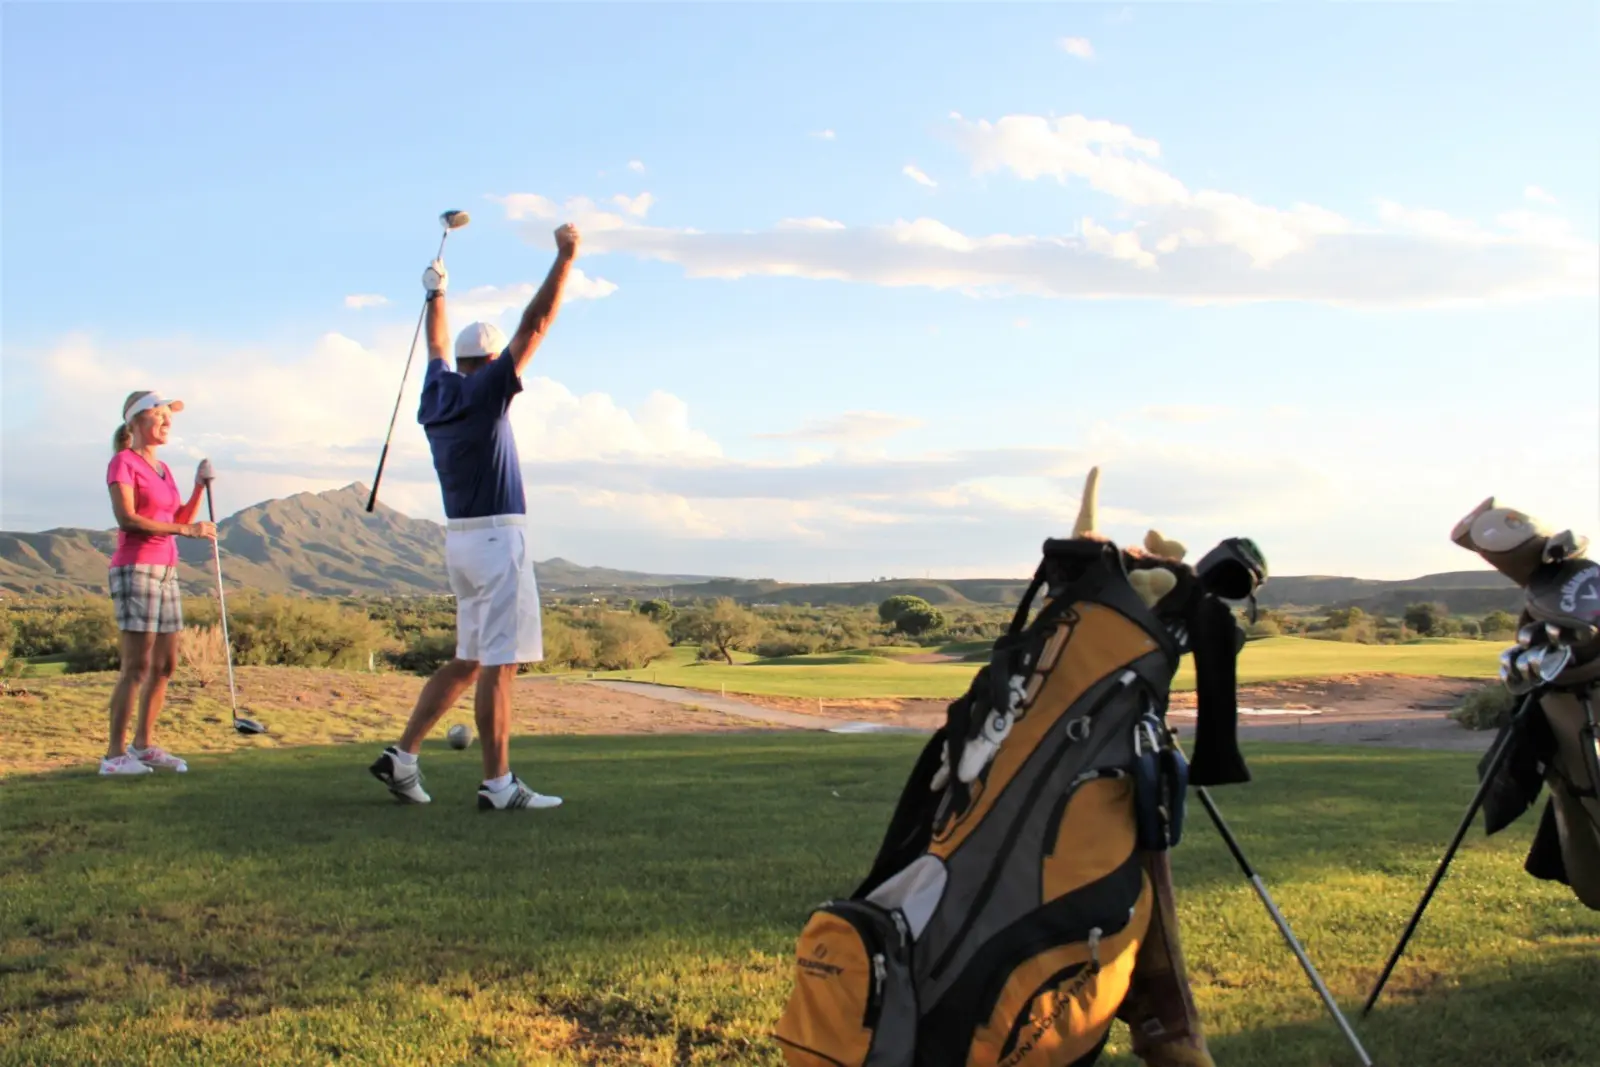 turtleback mountain resort sdr golf course